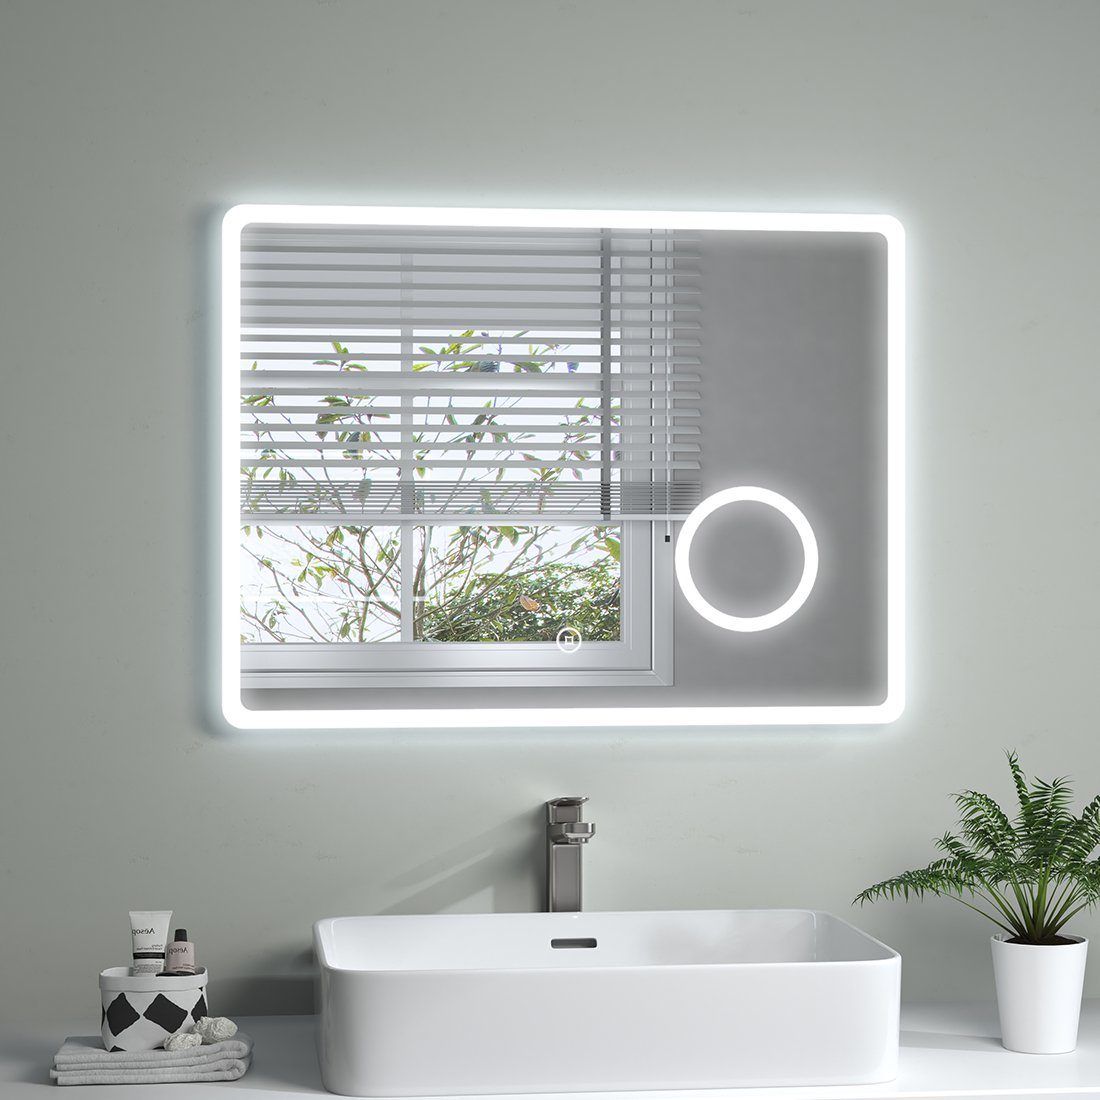 Badezimmerspiegel Schminkspiegel mit S'AFIELINA Touchschalter,3 Lichtfarben,Dimmbar,Beschlagfrei,Energiesparend,IP54 LED Beleuchtung Badspiegel Energiesparend,